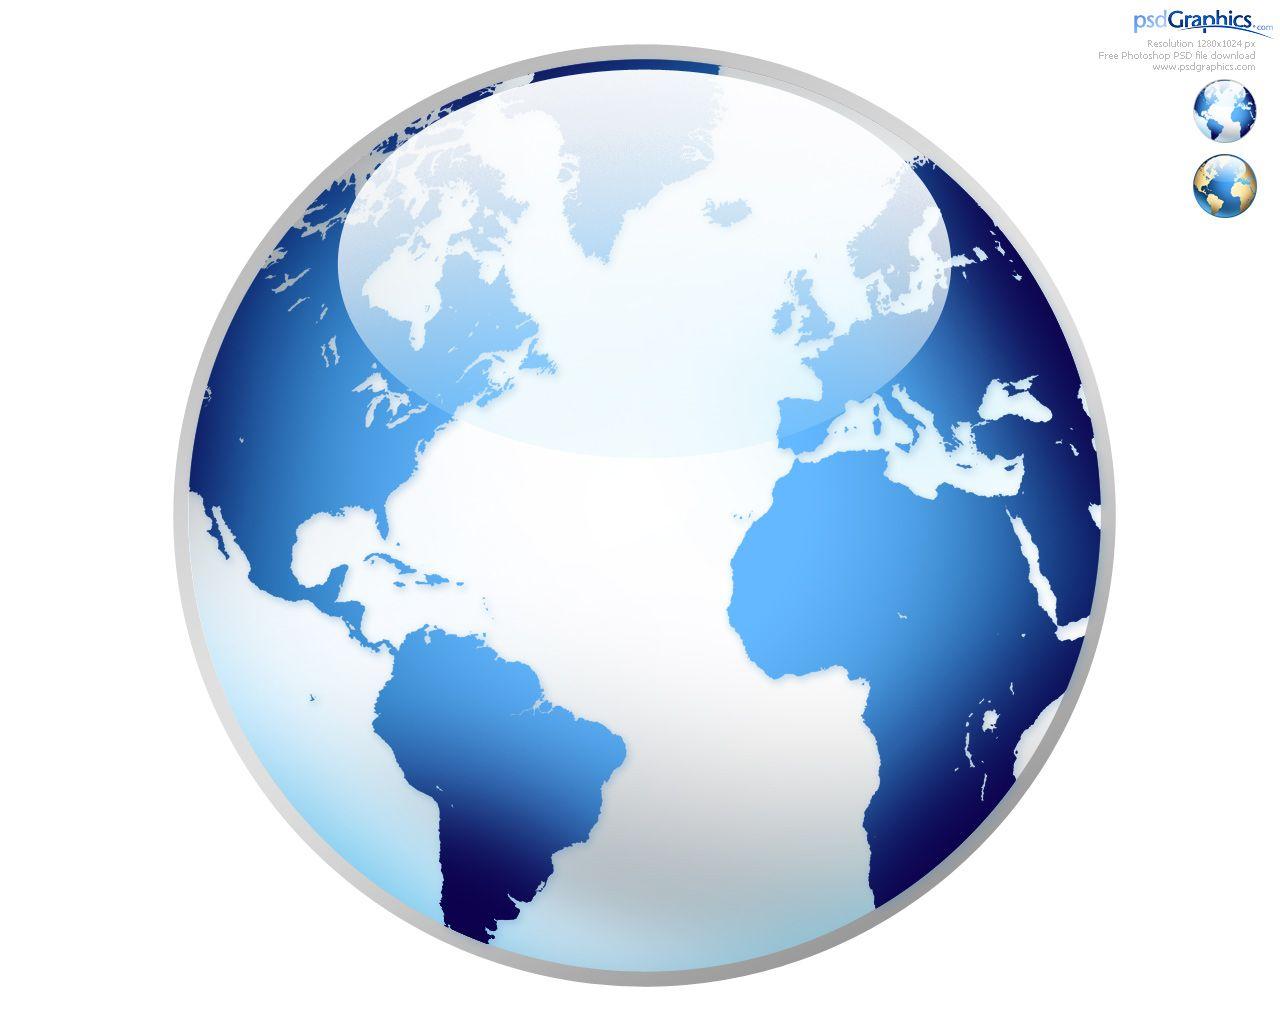 3D World Globe Logo - Photoshop world globe icon | PSDGraphics